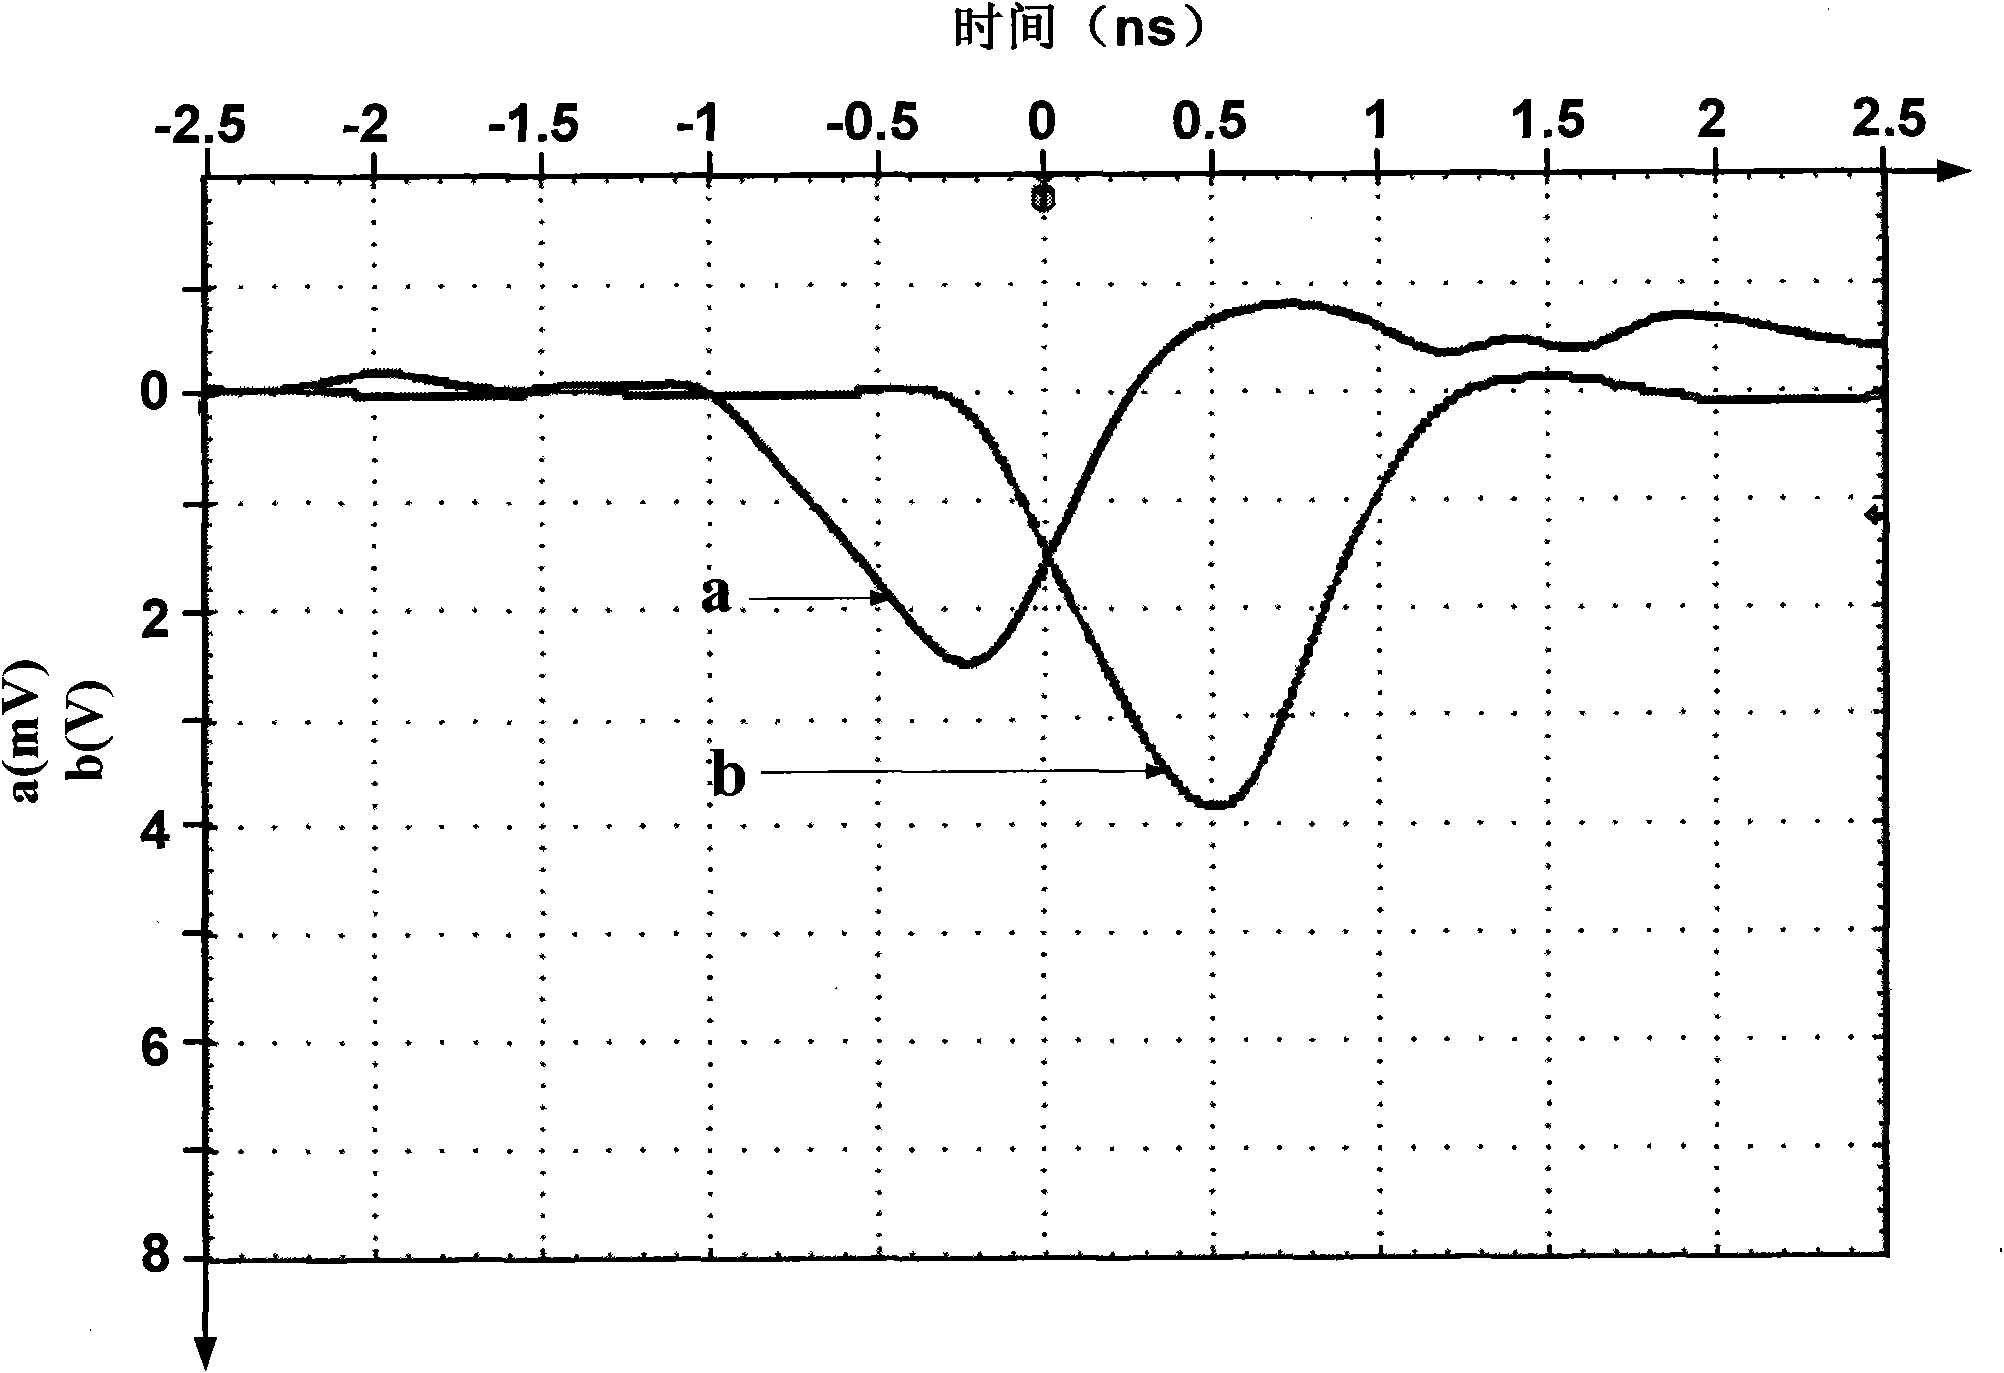 Subnanosecond high-voltage pulse measurement system